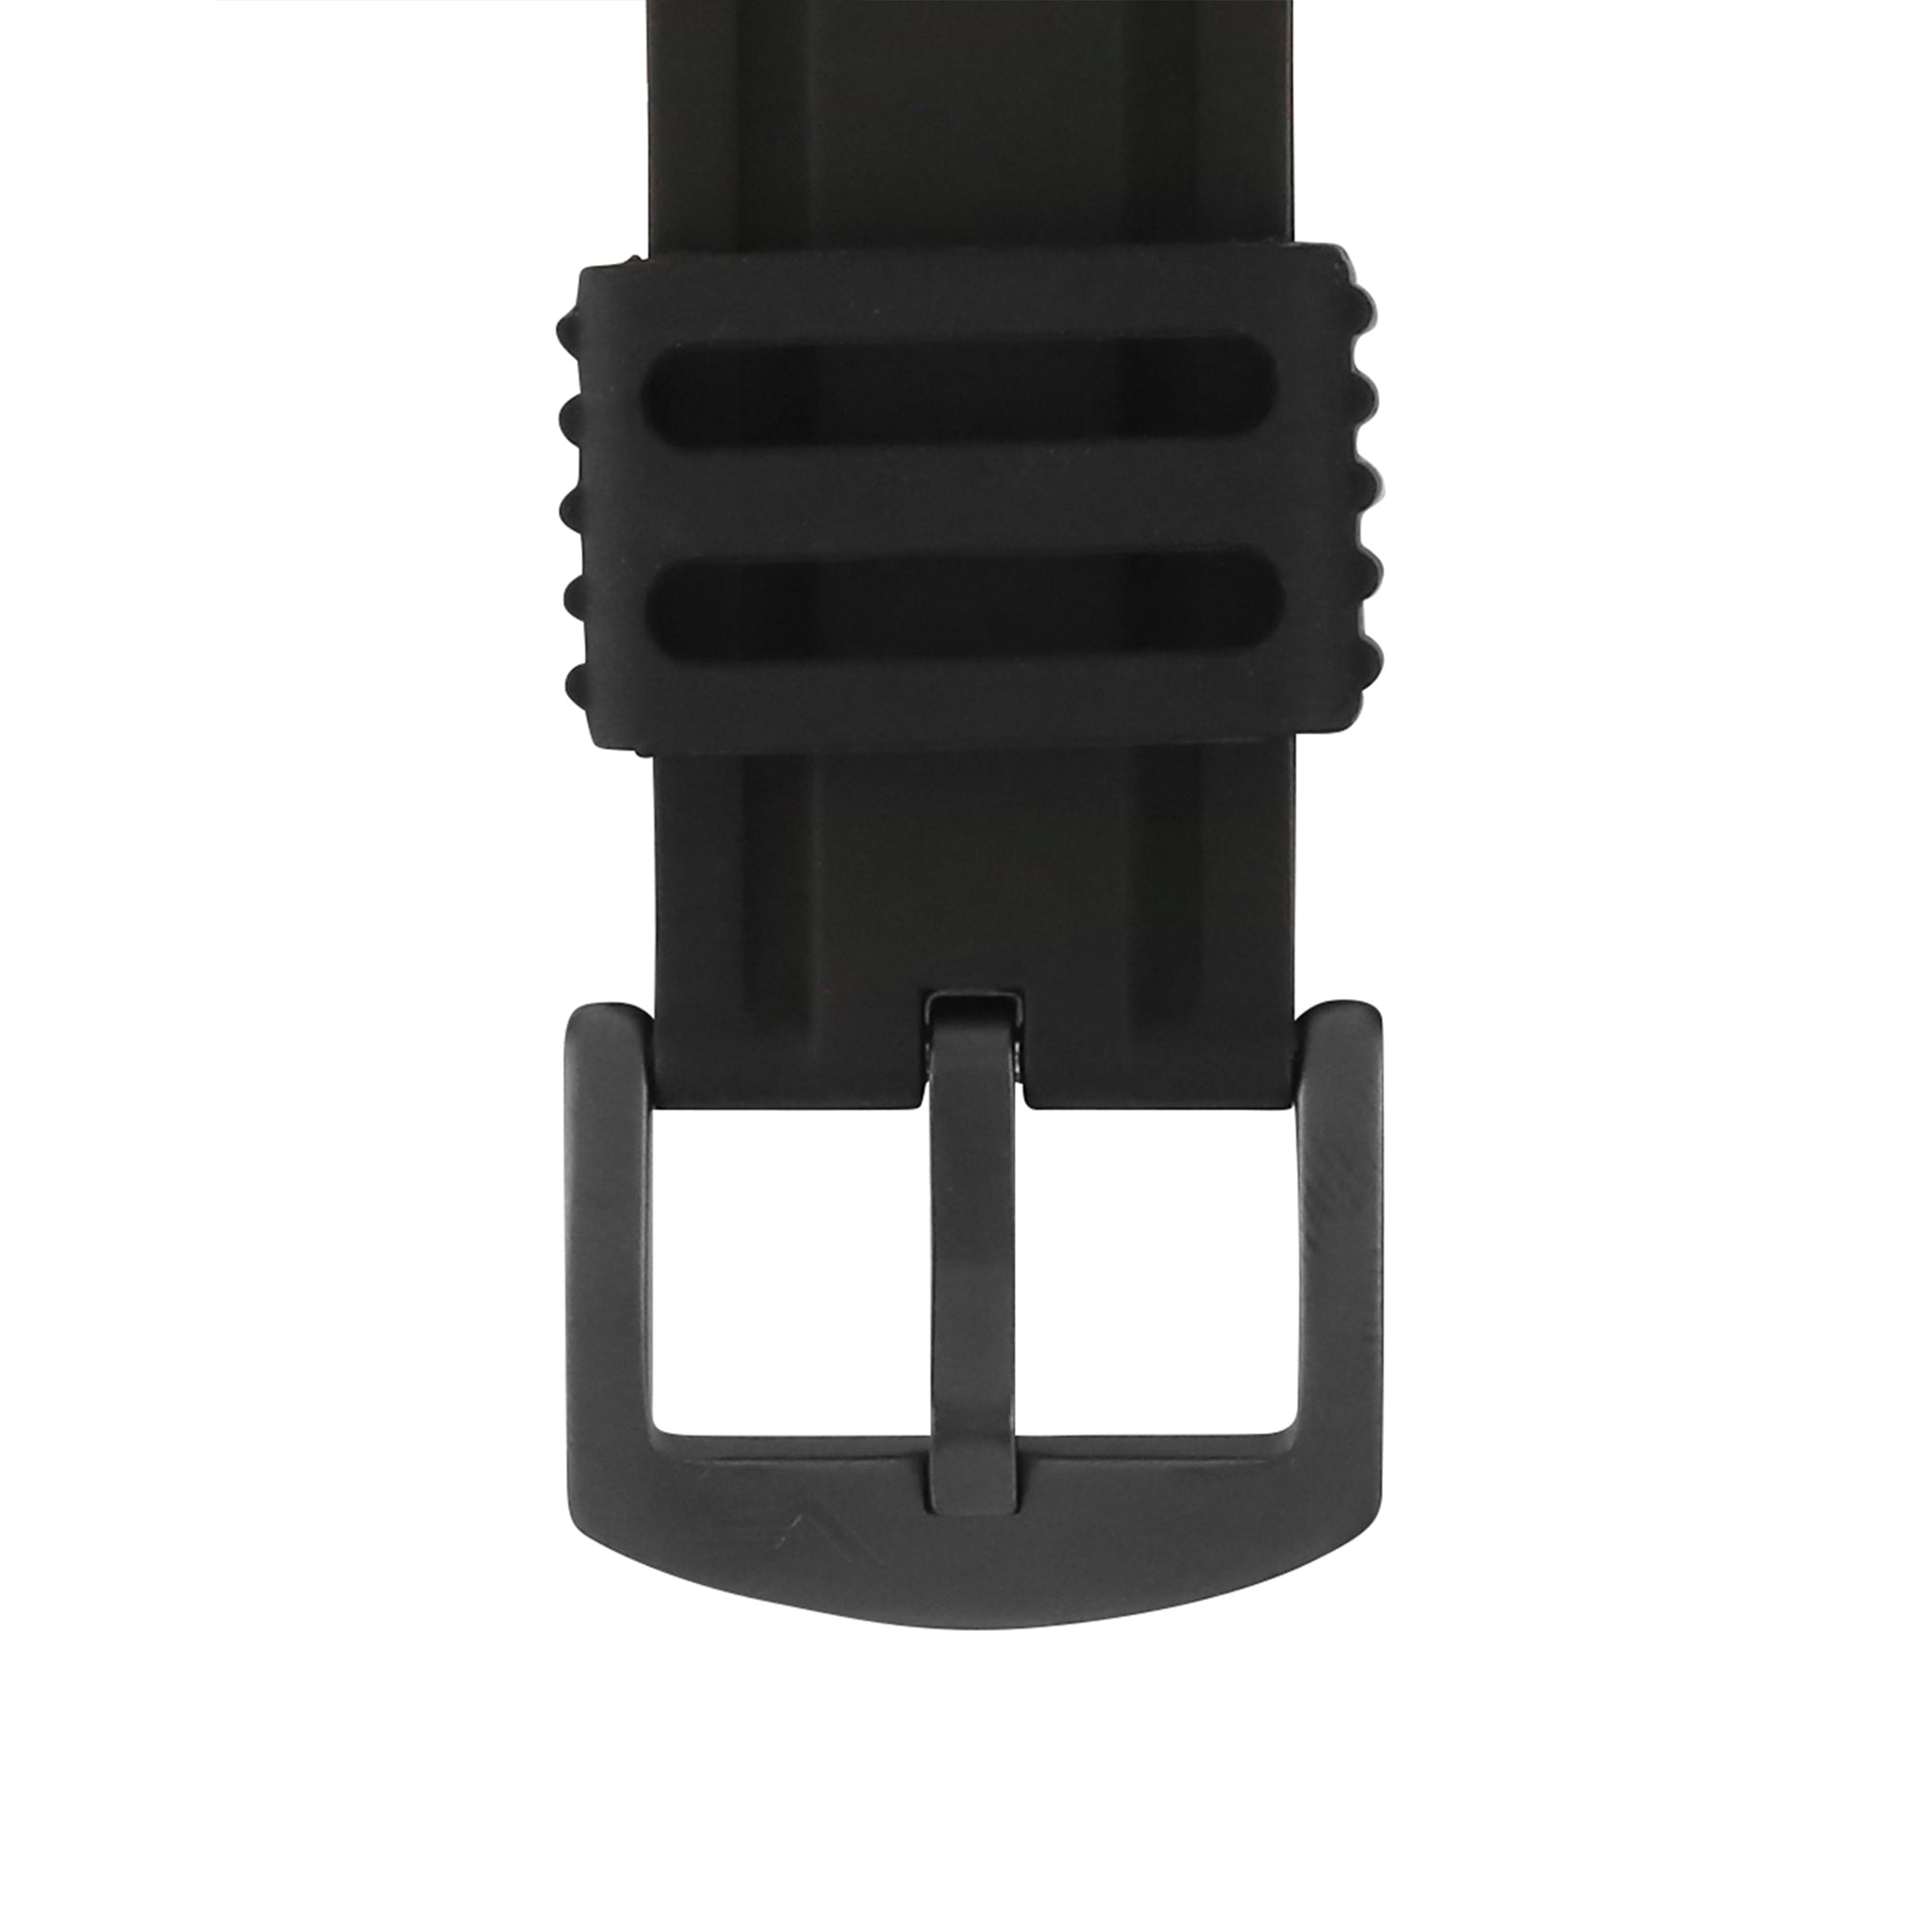 ANCHAR BLACK SILICONE STRAP 24mm - BLACK BUCKLE